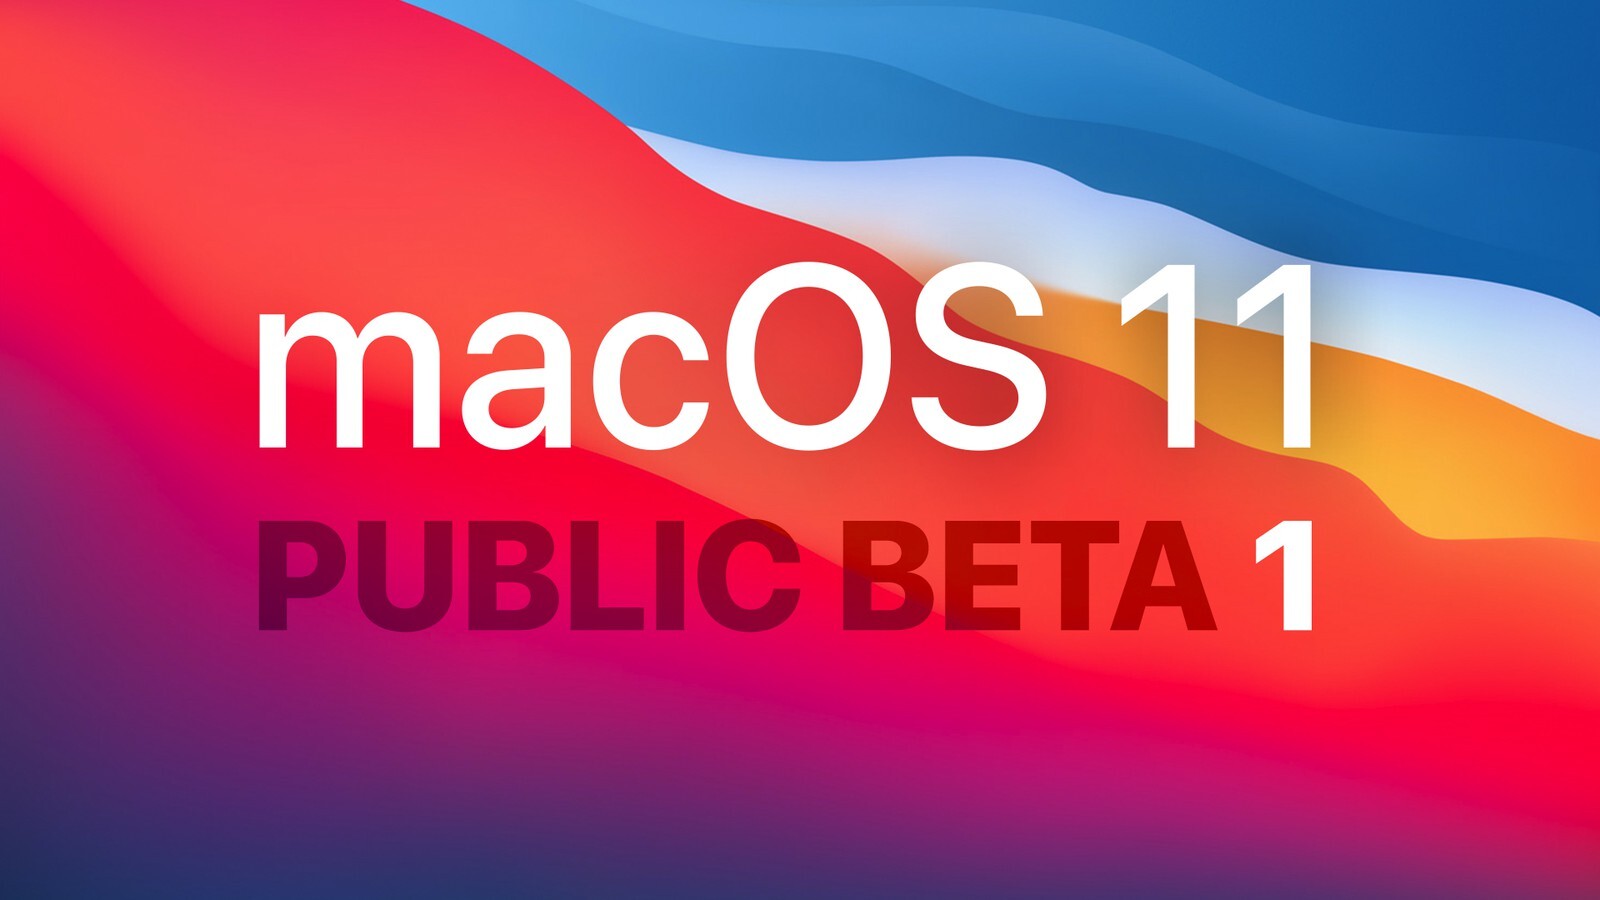 Big Sur Beta 4新增了哪些功能？macOS 11 Big Sur beta 4更新详解